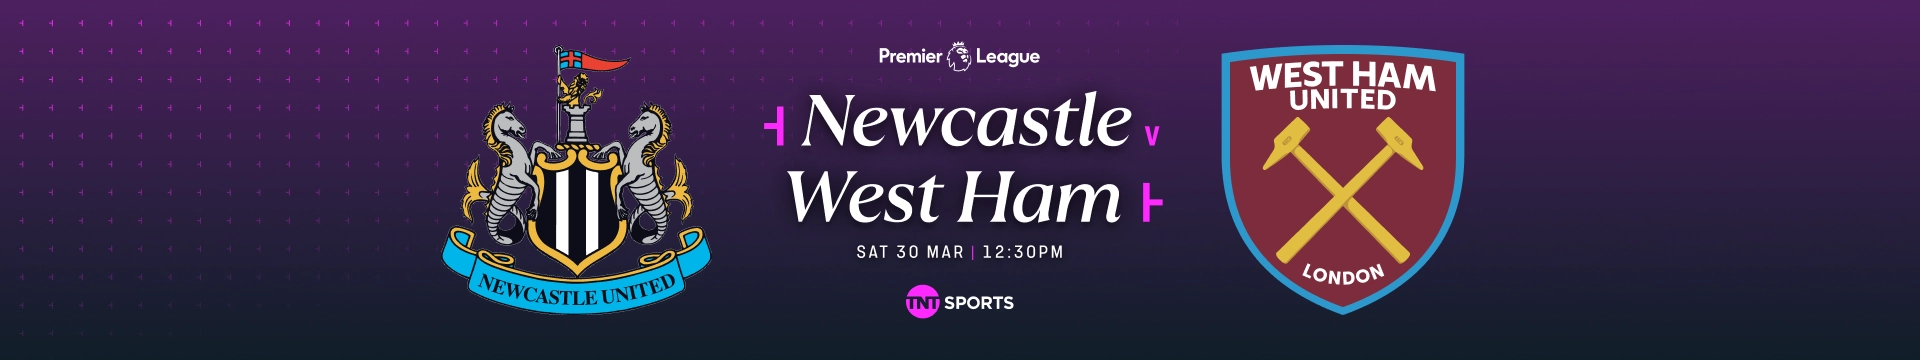 Newcastle v West Ham Saturday 30 March at 12:30pm